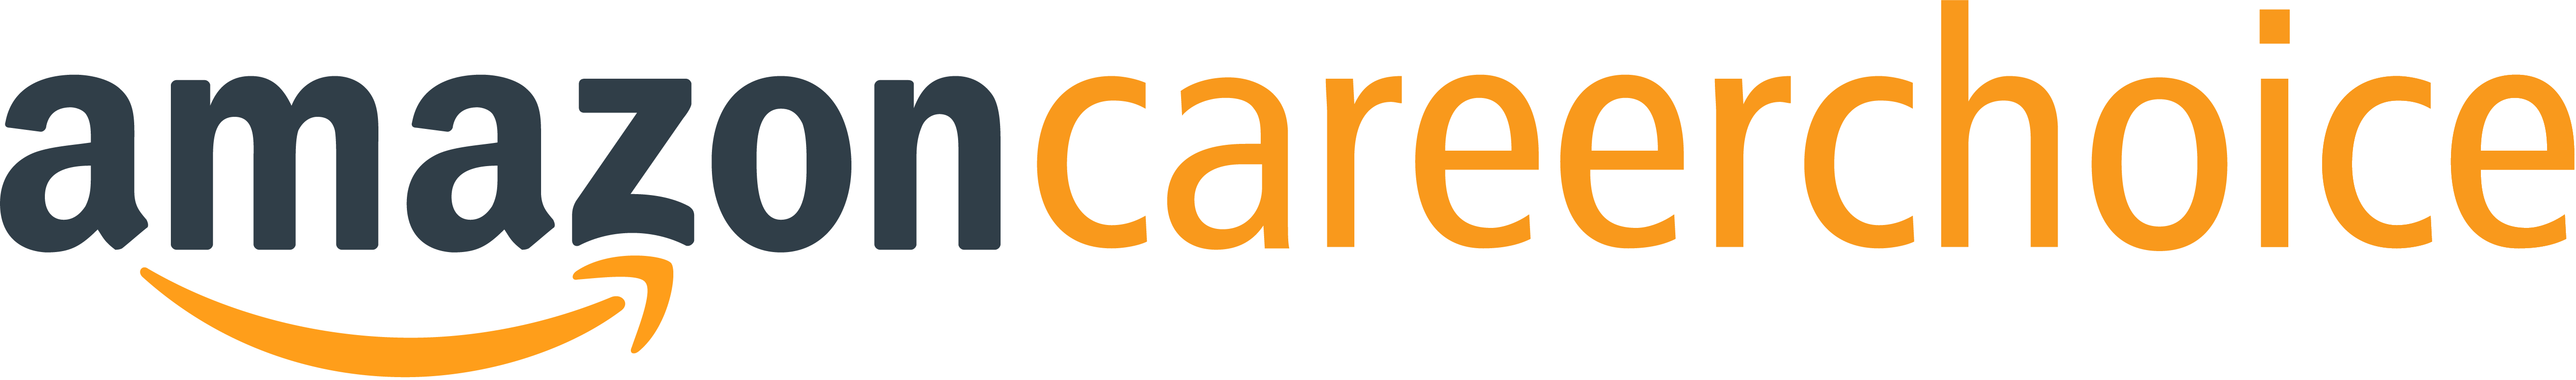 Amazon Career Choice partnership logo